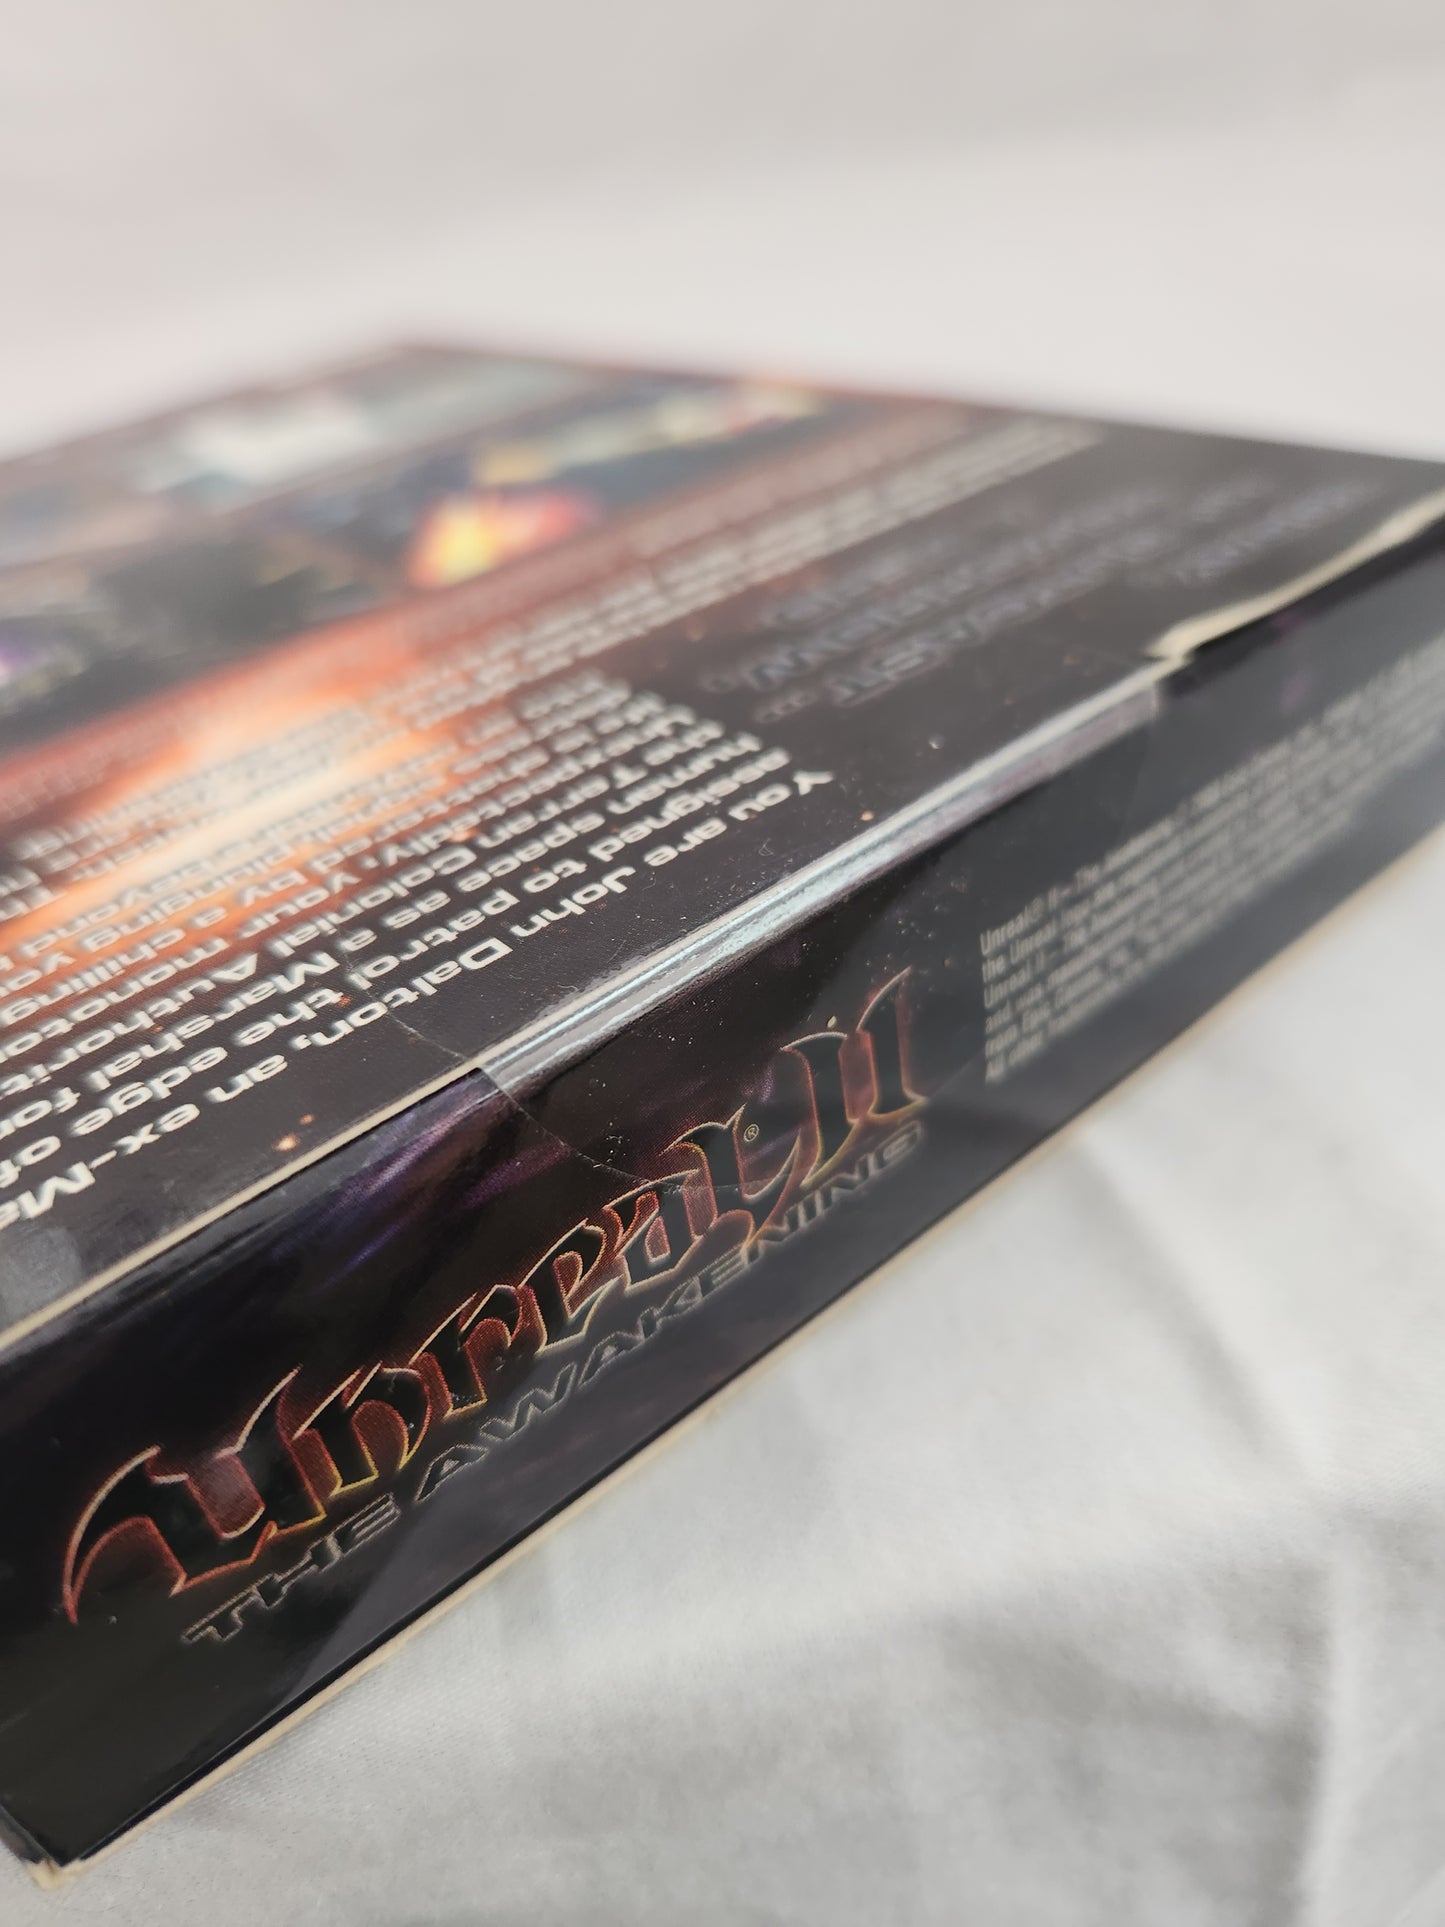 Unreal II: The Awakening PC CD-ROM Game small box - Sealed